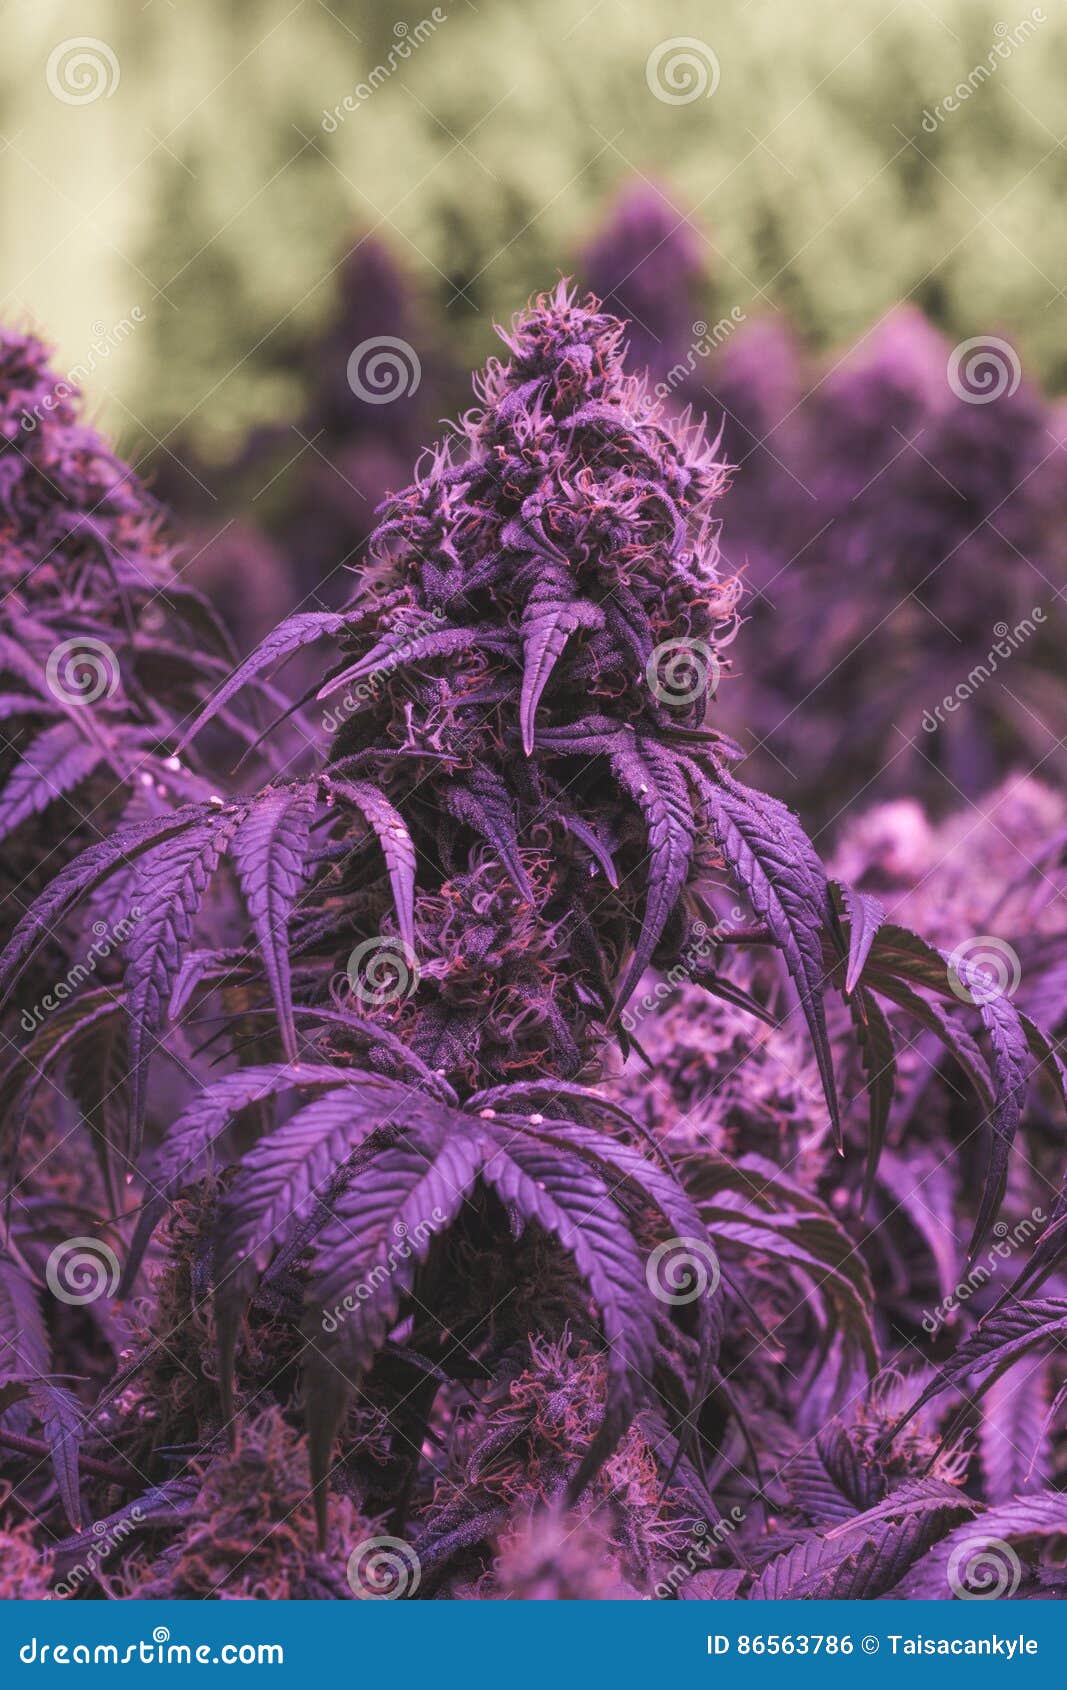 Large indoor purple medical marijuana buds. Dense indoor purple medical marijuana buds with visible pistils